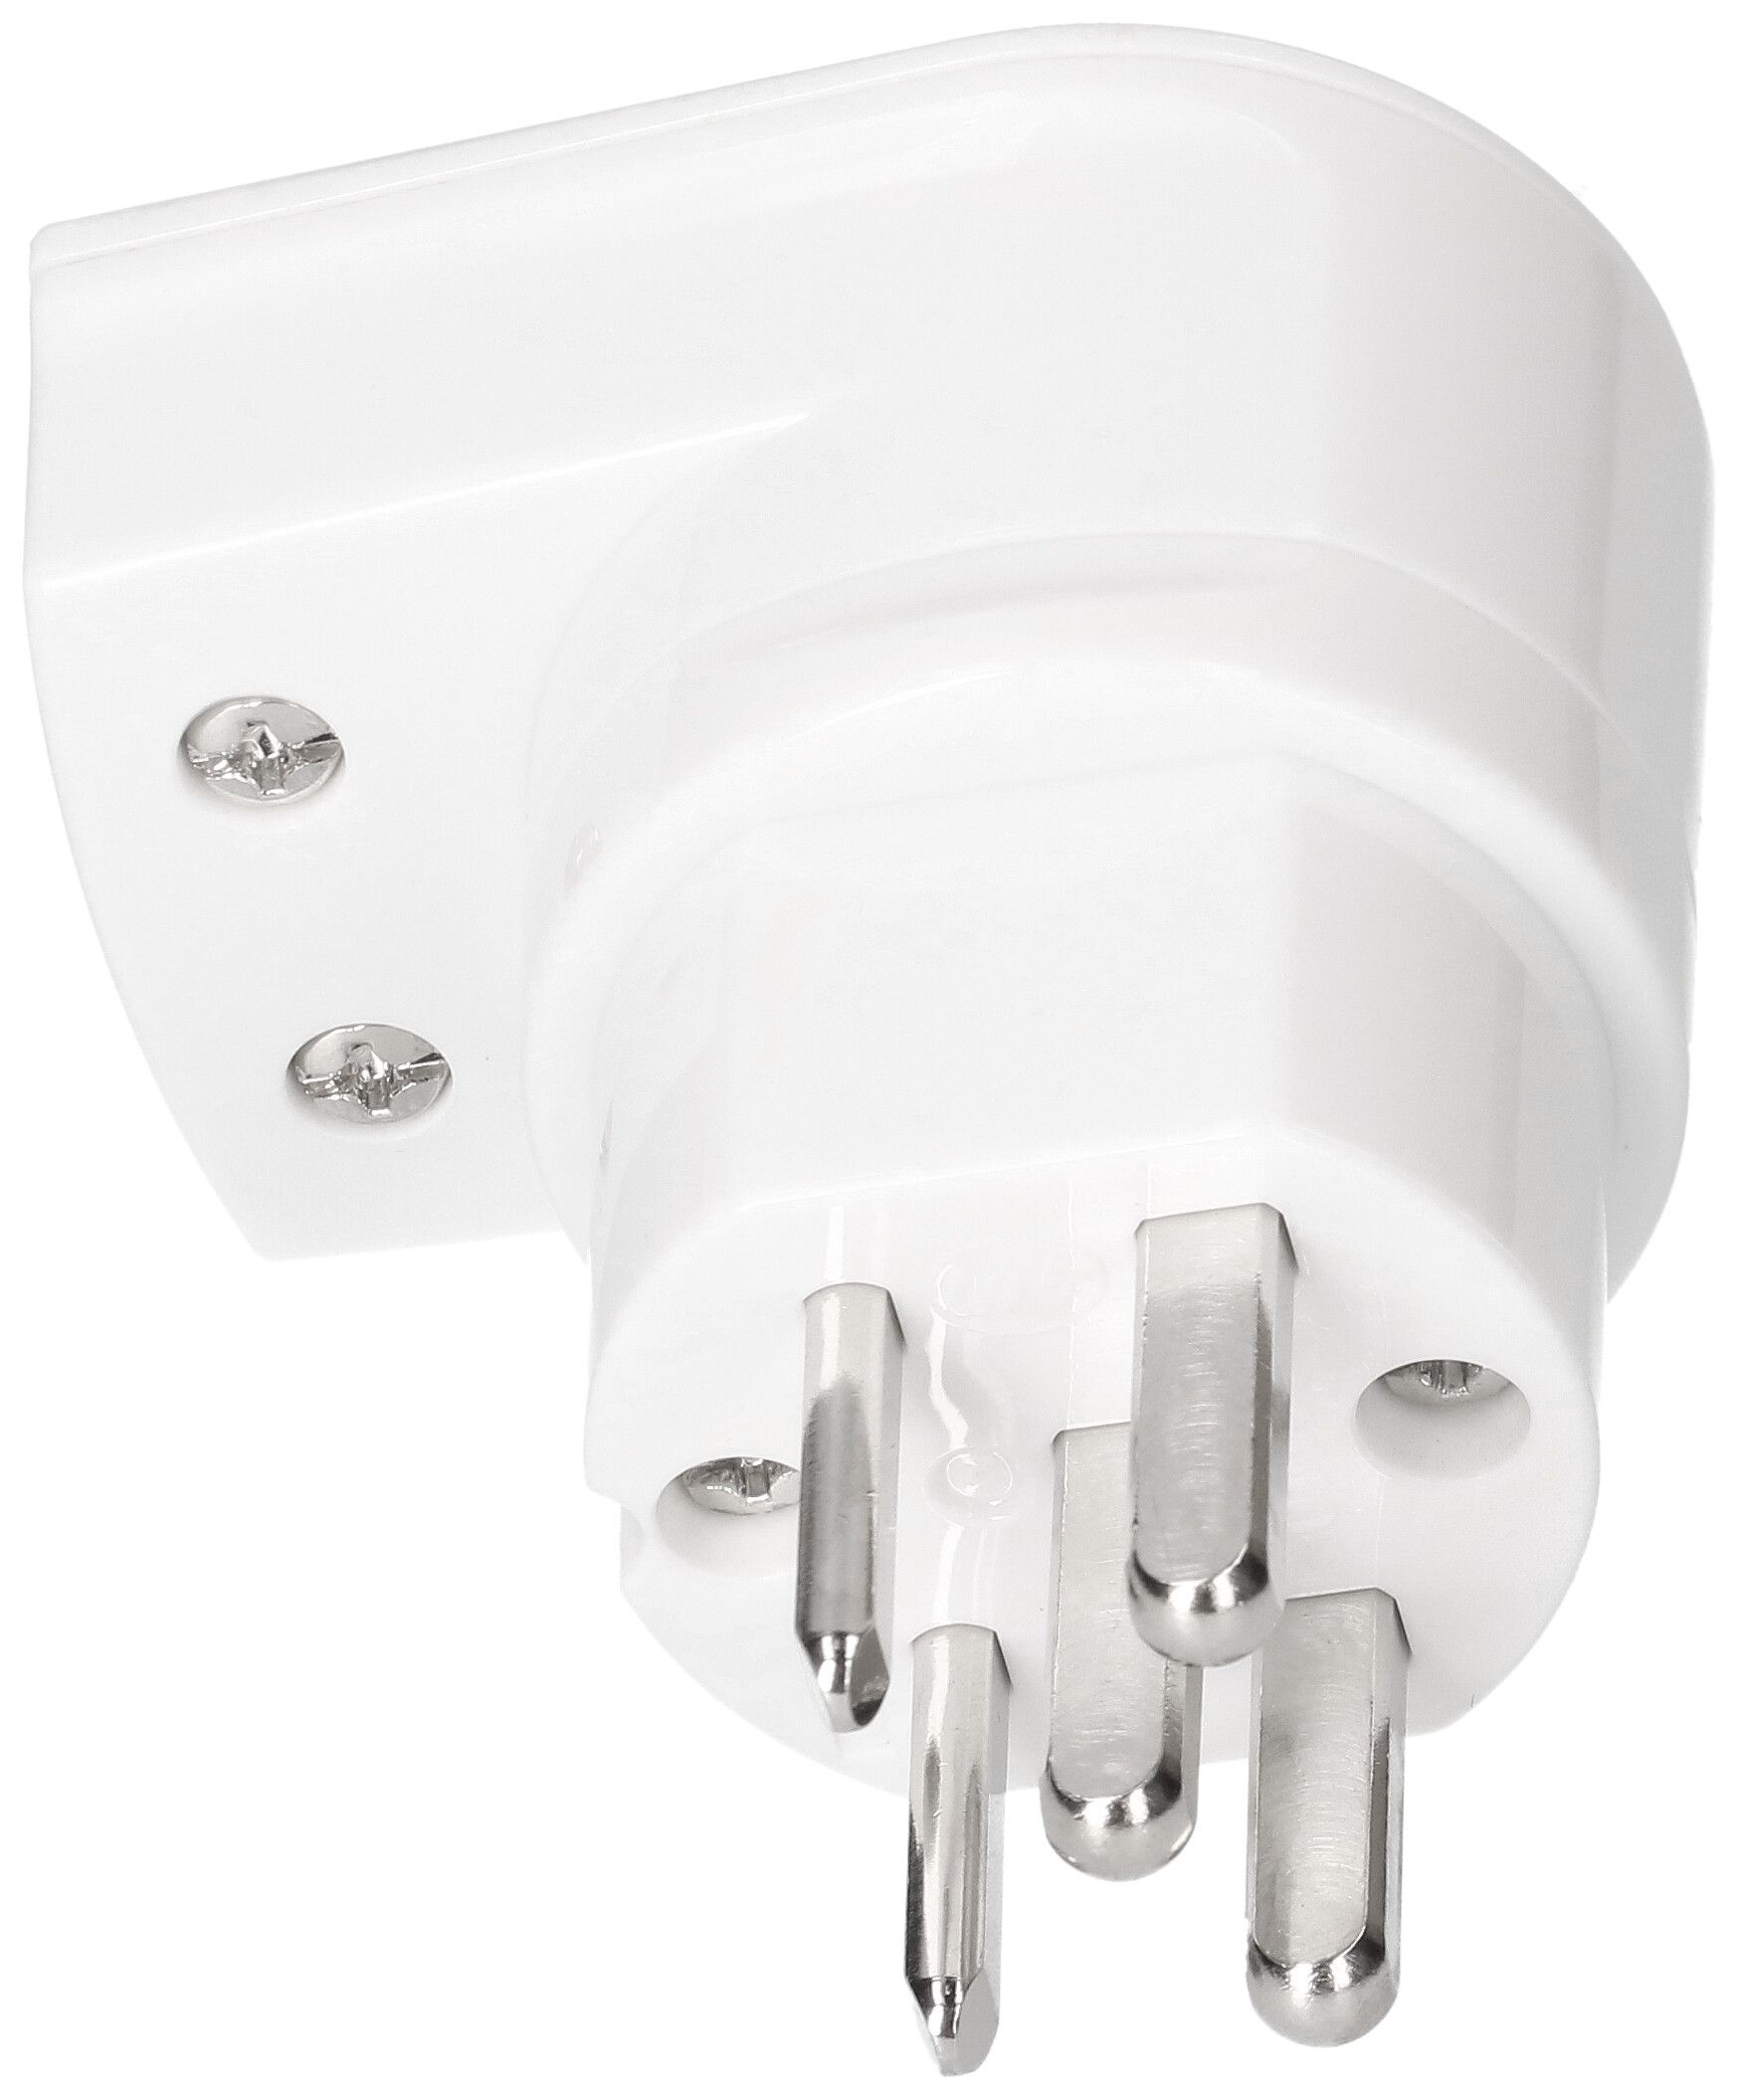 Plug TH type 25 5-pol angled white